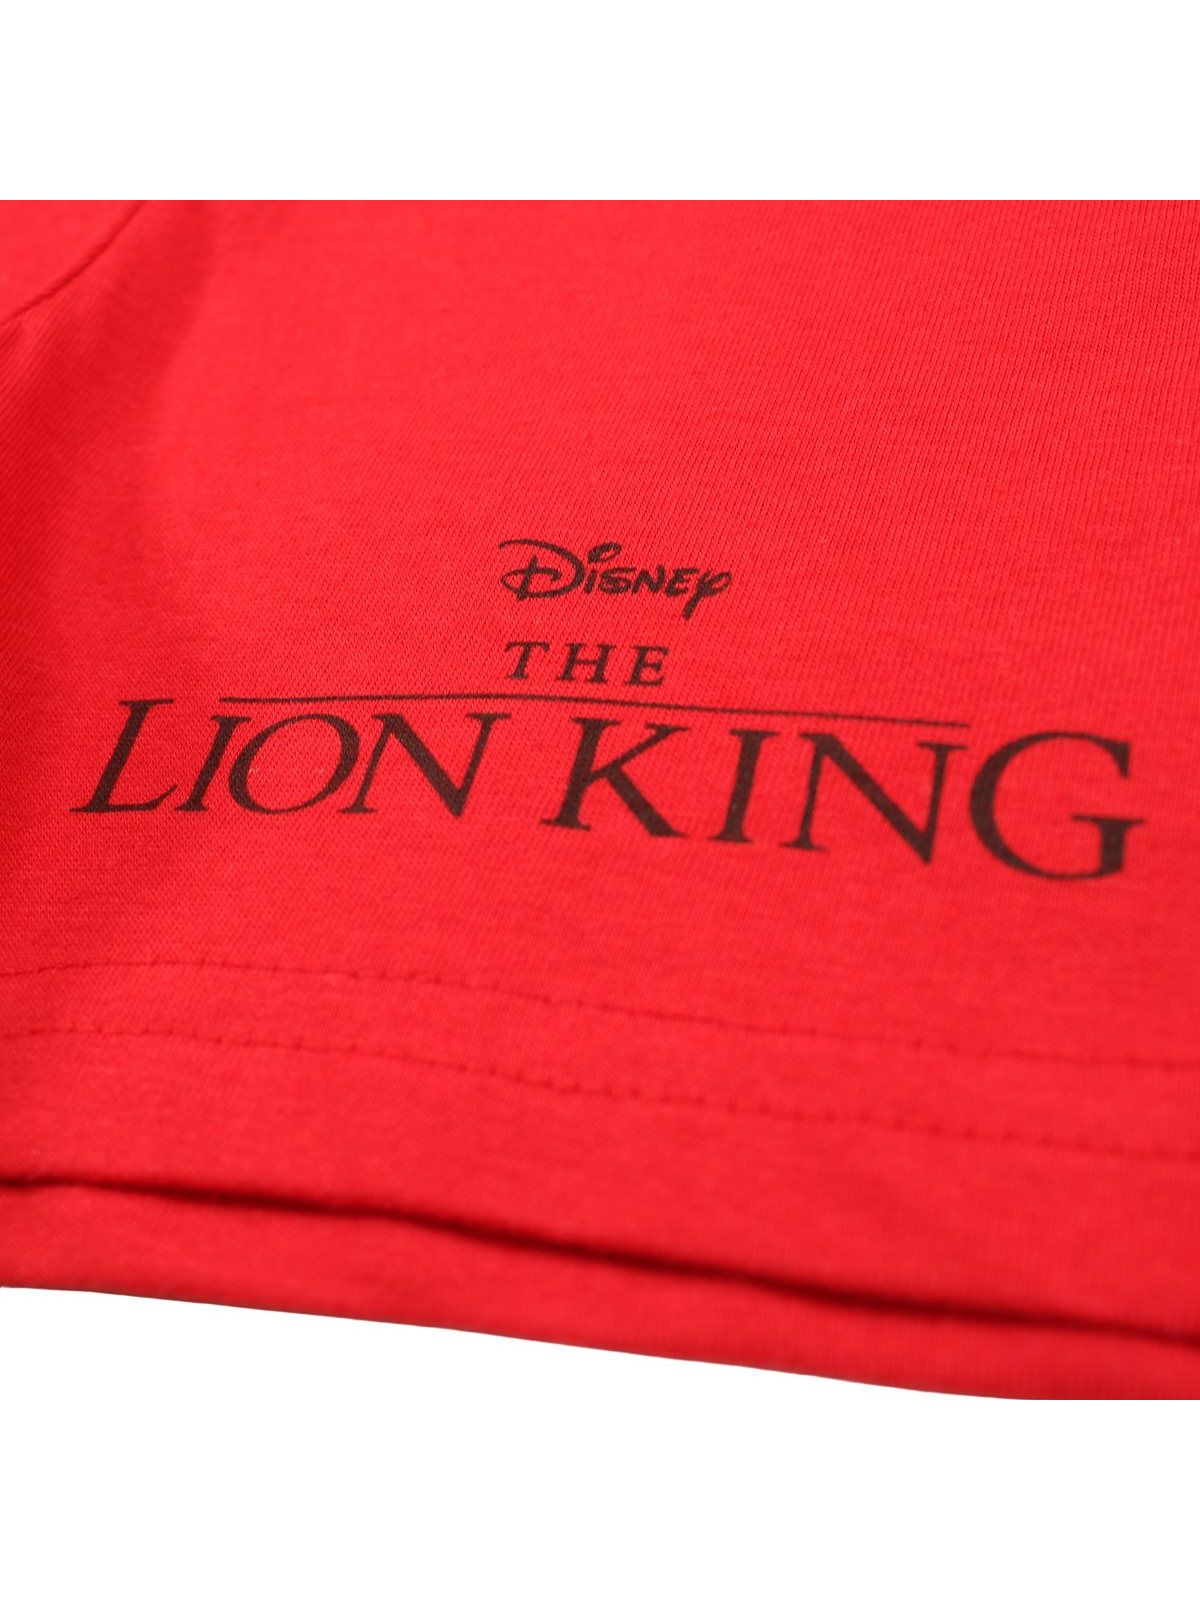 The Lion King set